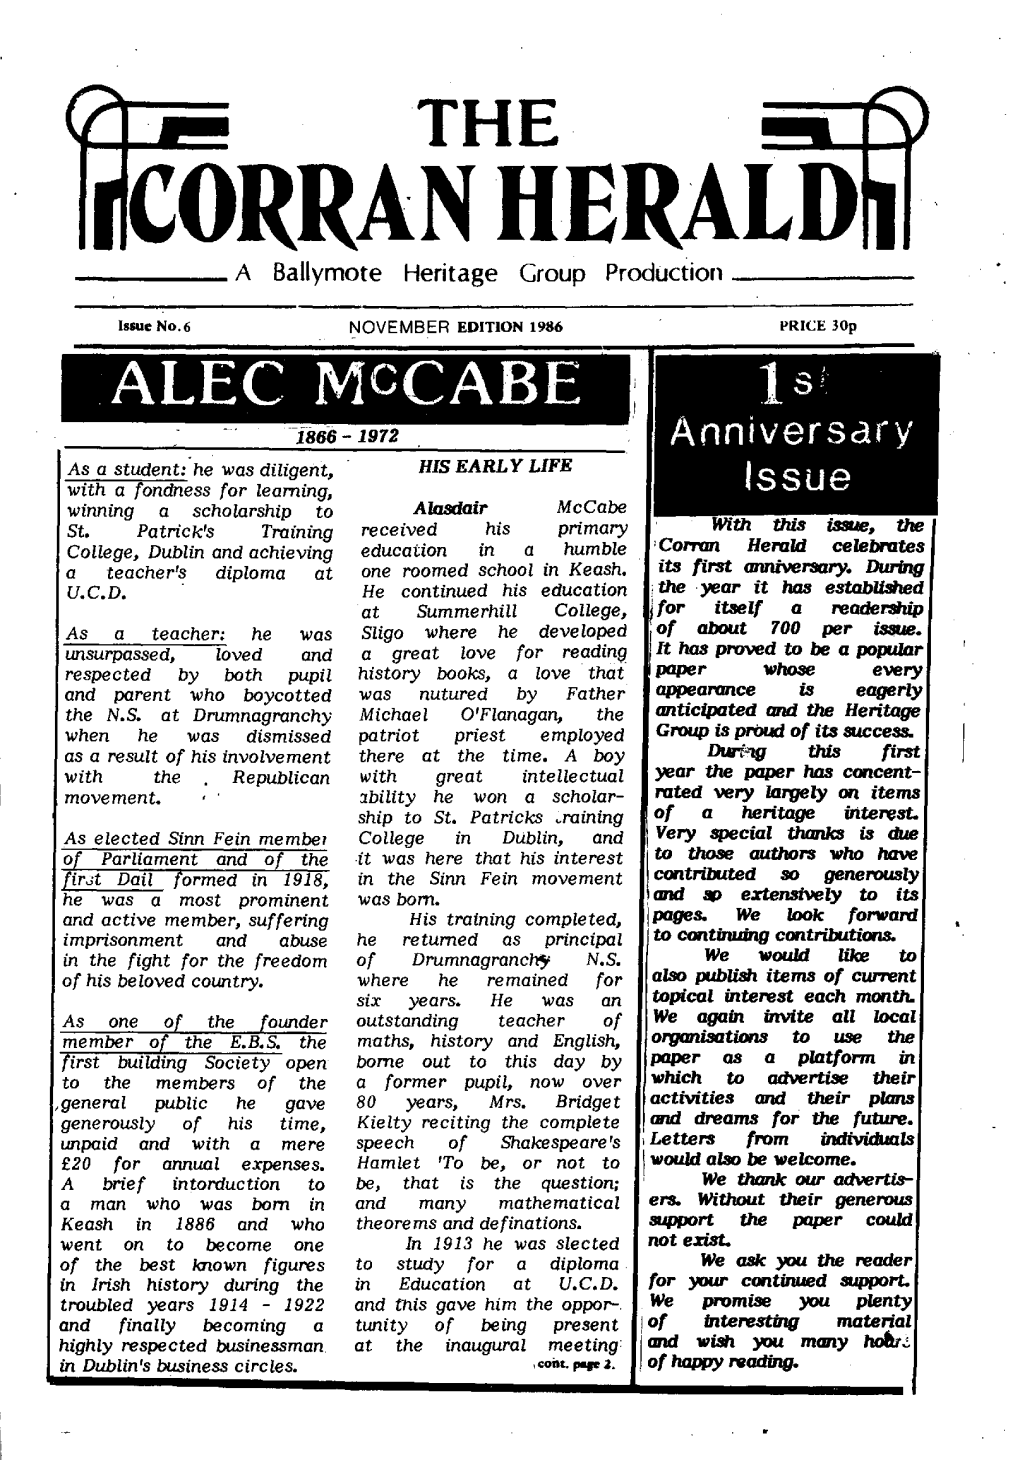 The Corran Herald Issue 06, 1986